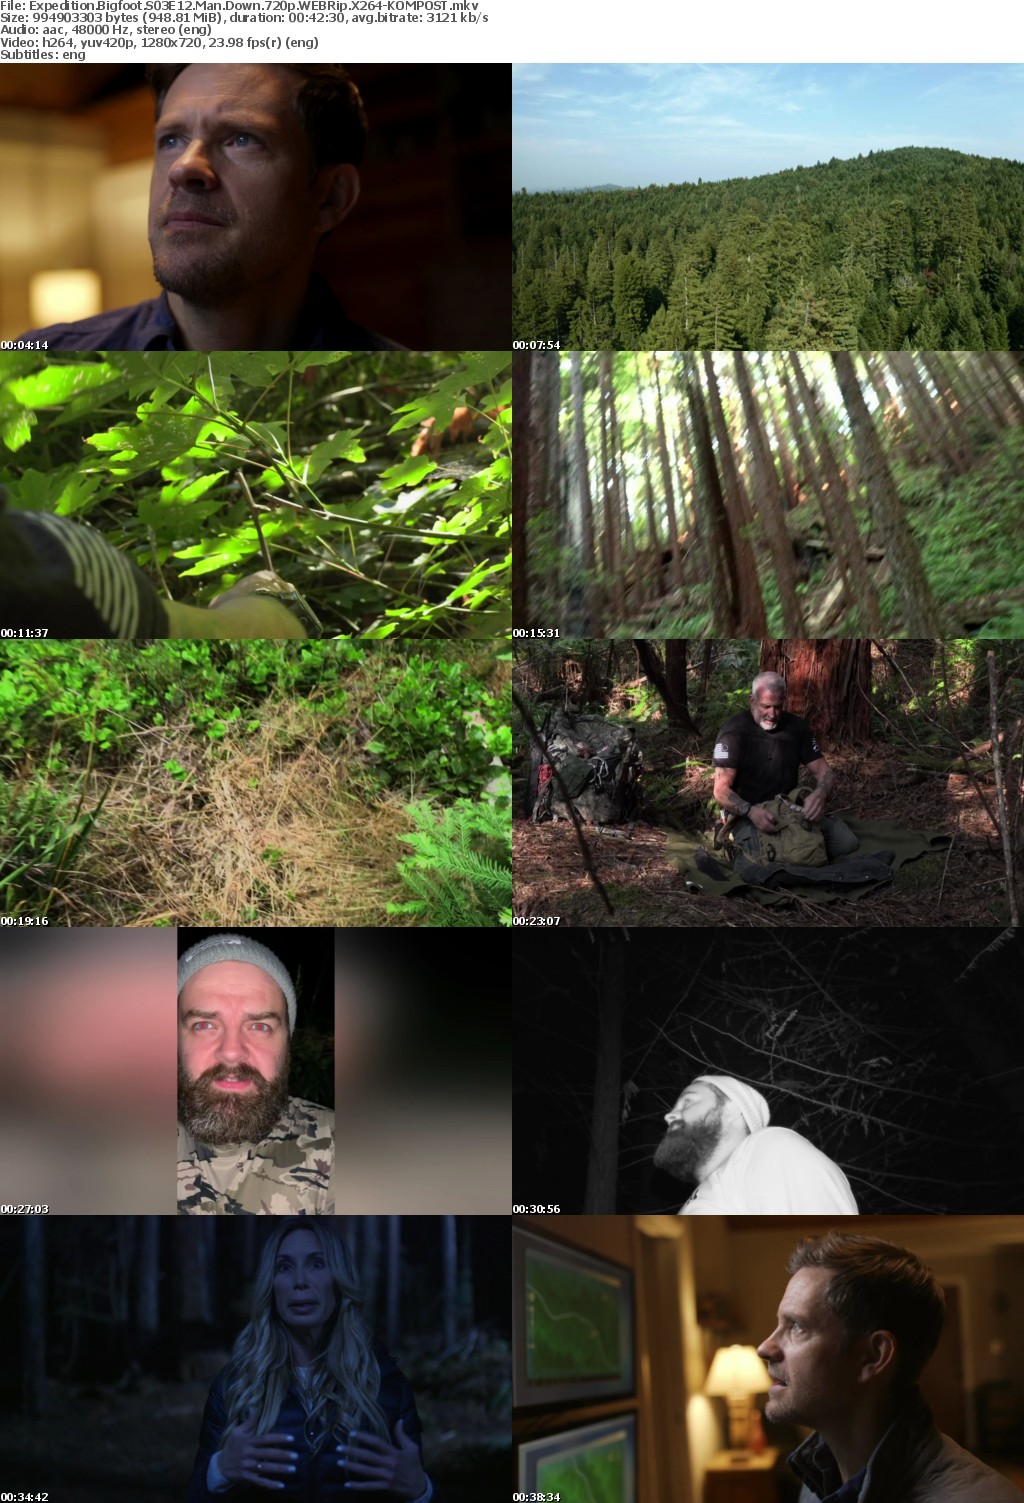 Expedition Bigfoot S03E12 Man Down 720p WEBRip X264-KOMPOST